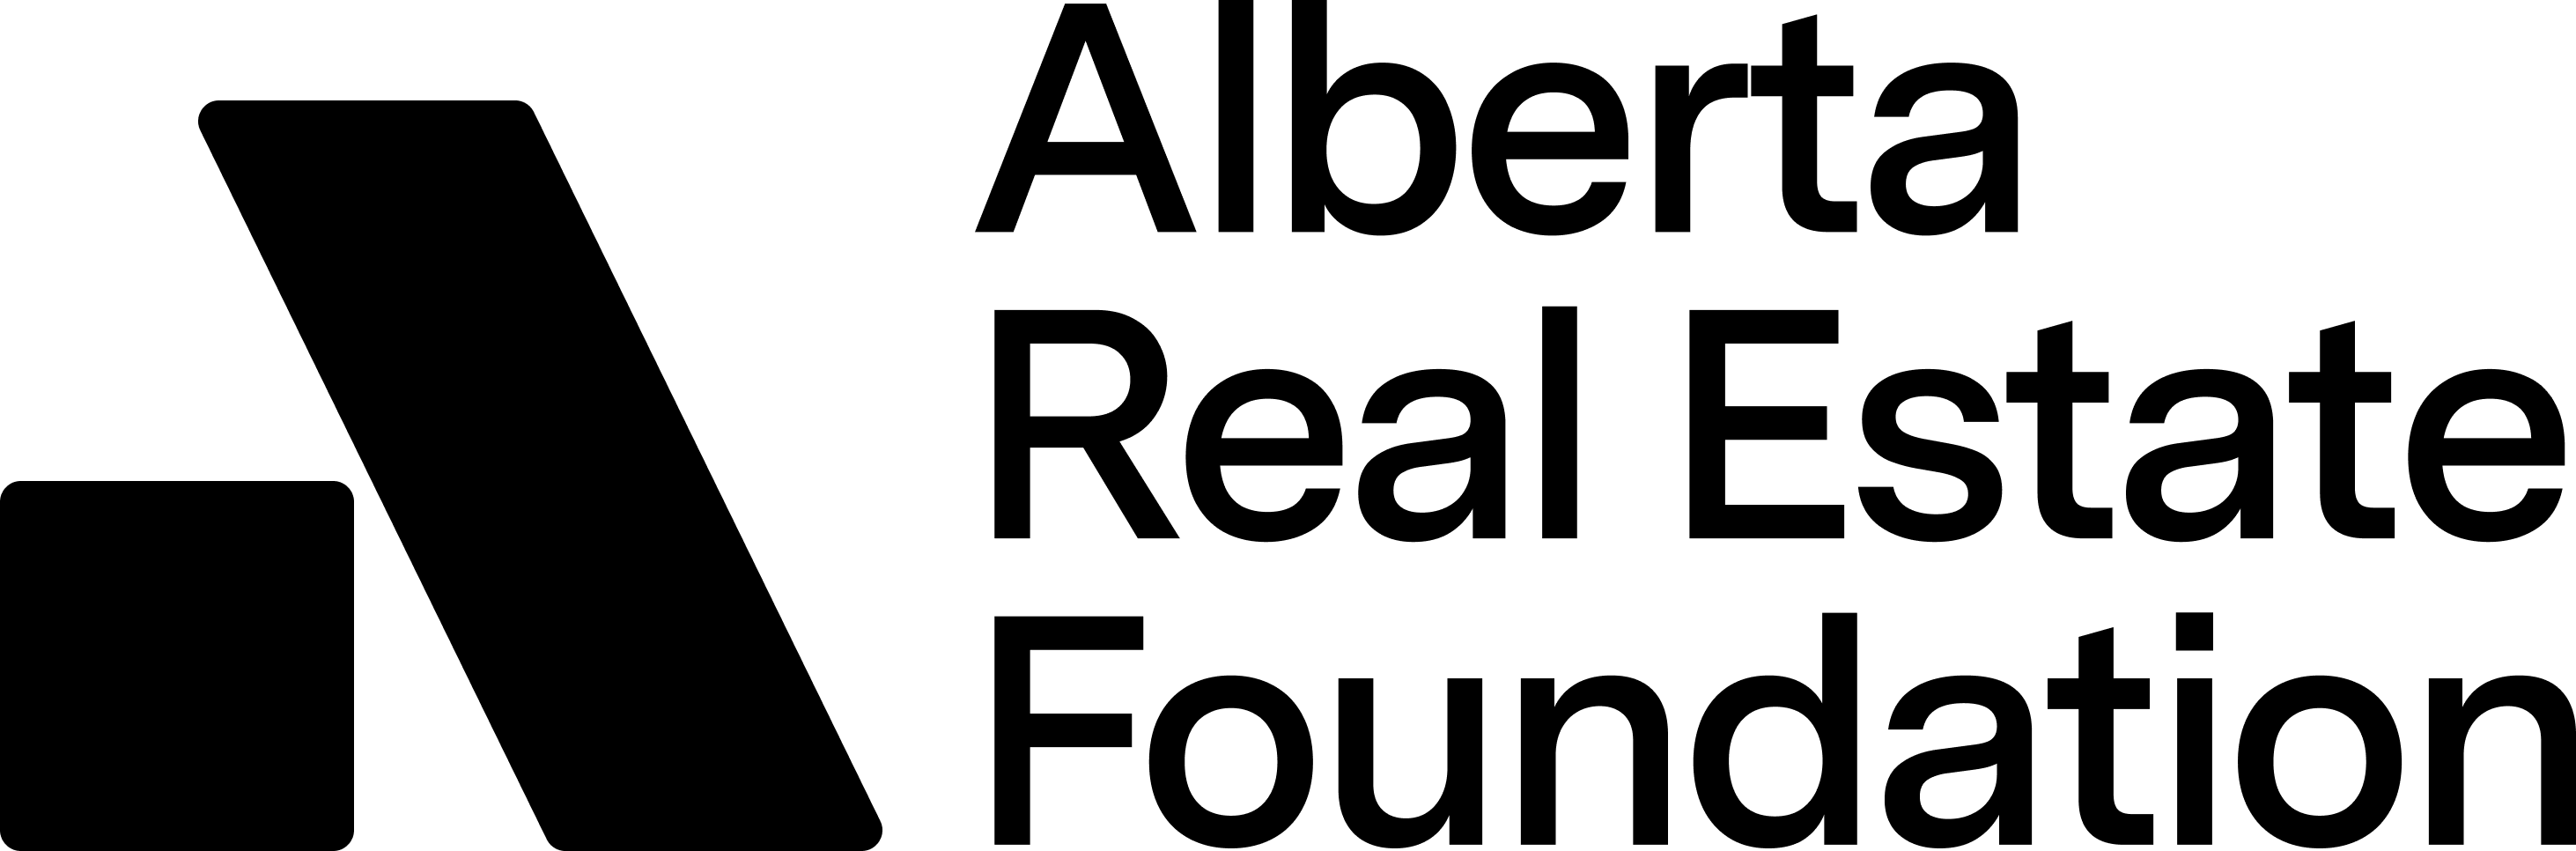 Logo for Alberta Real Estate Foundation on a transparent background